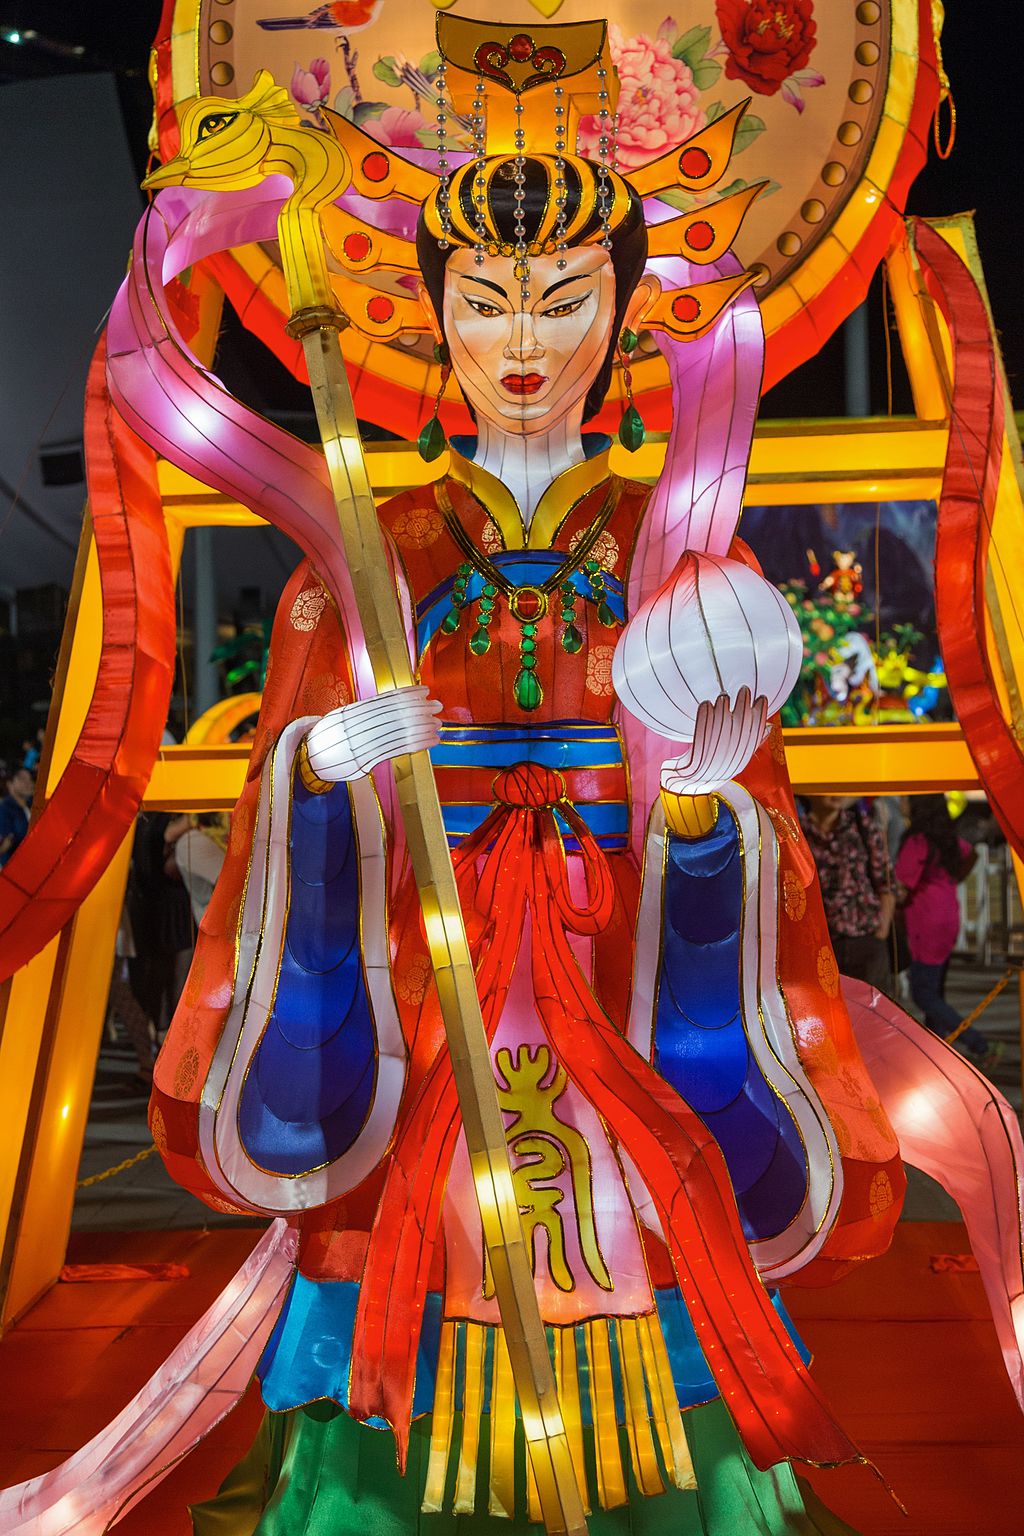 River Hongbao 2018 – The Iconic Lunar Chinese New Year Celebrations at Marina Bay